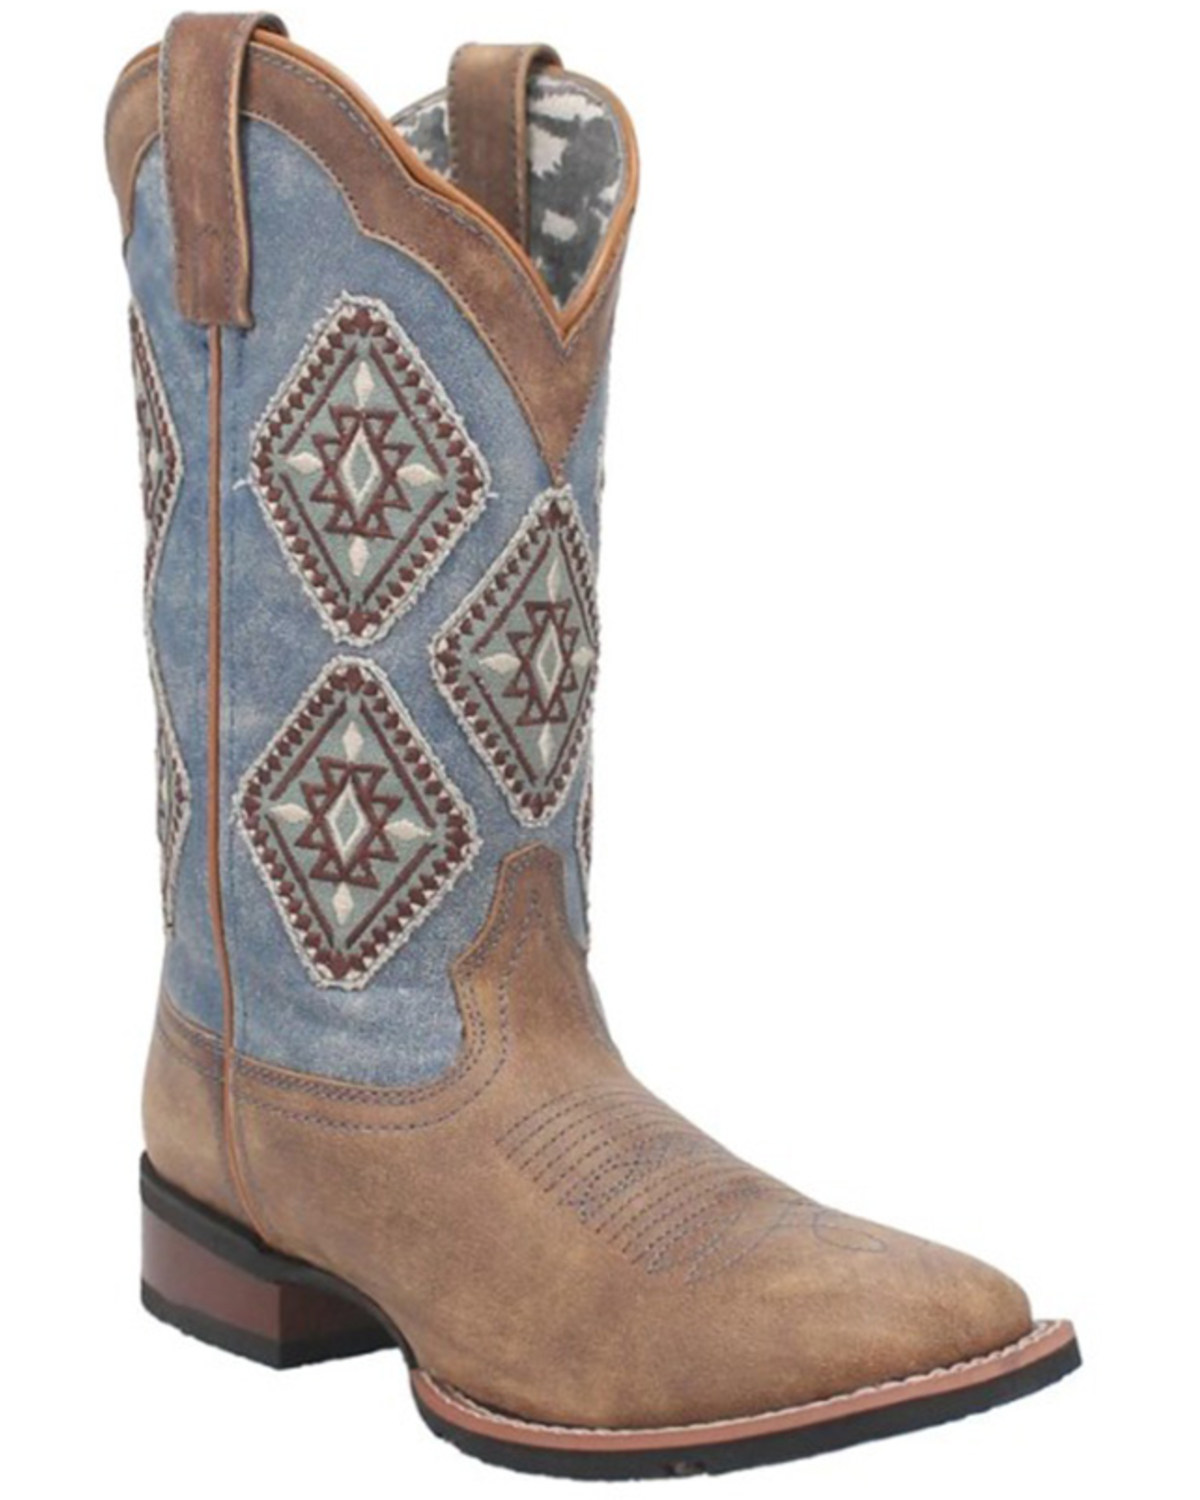 Laredo Women's Santa Fe Western Boots - Broad Square Toe